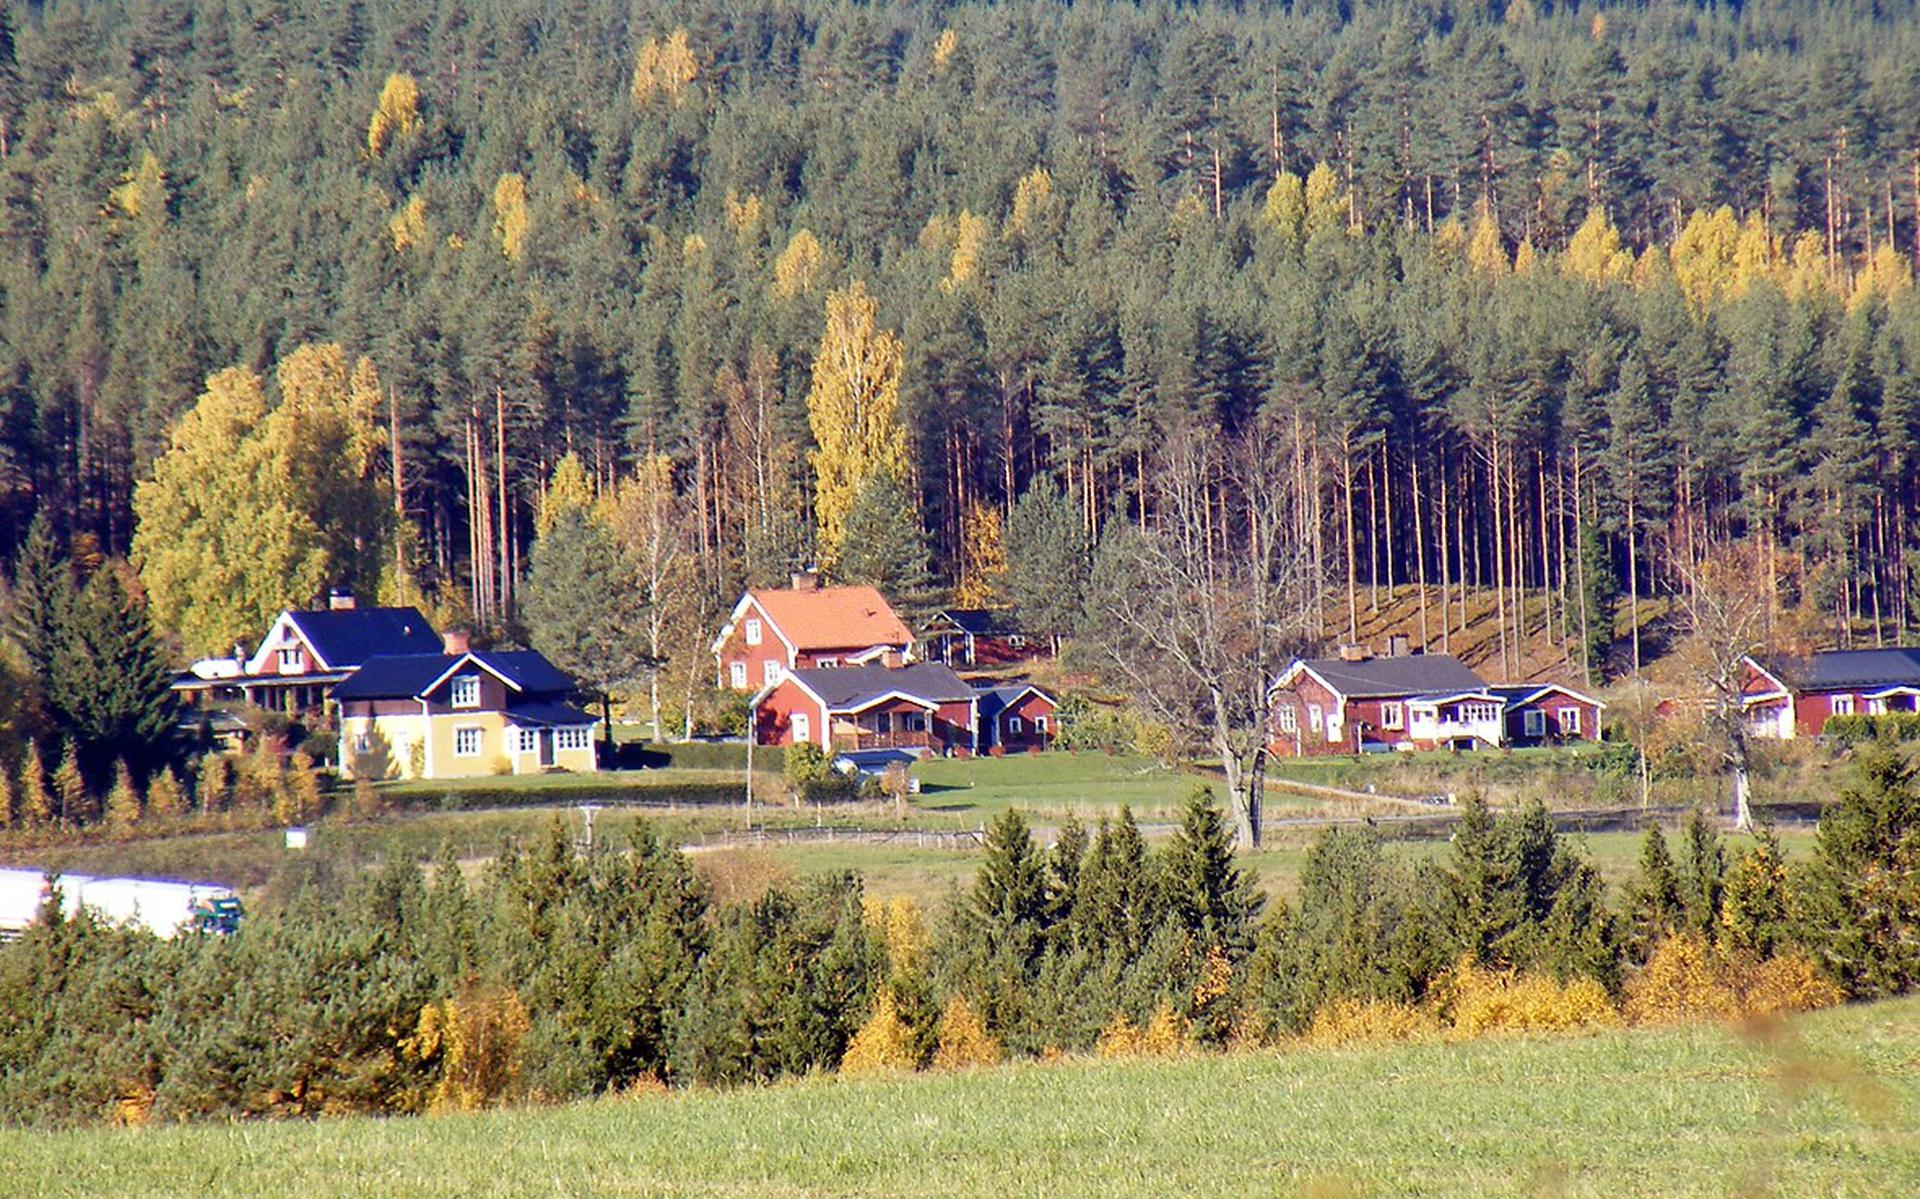 Het piepkleine dorpje Tutemo in Värmland is rustig. Foto: Martin E. van Doornik